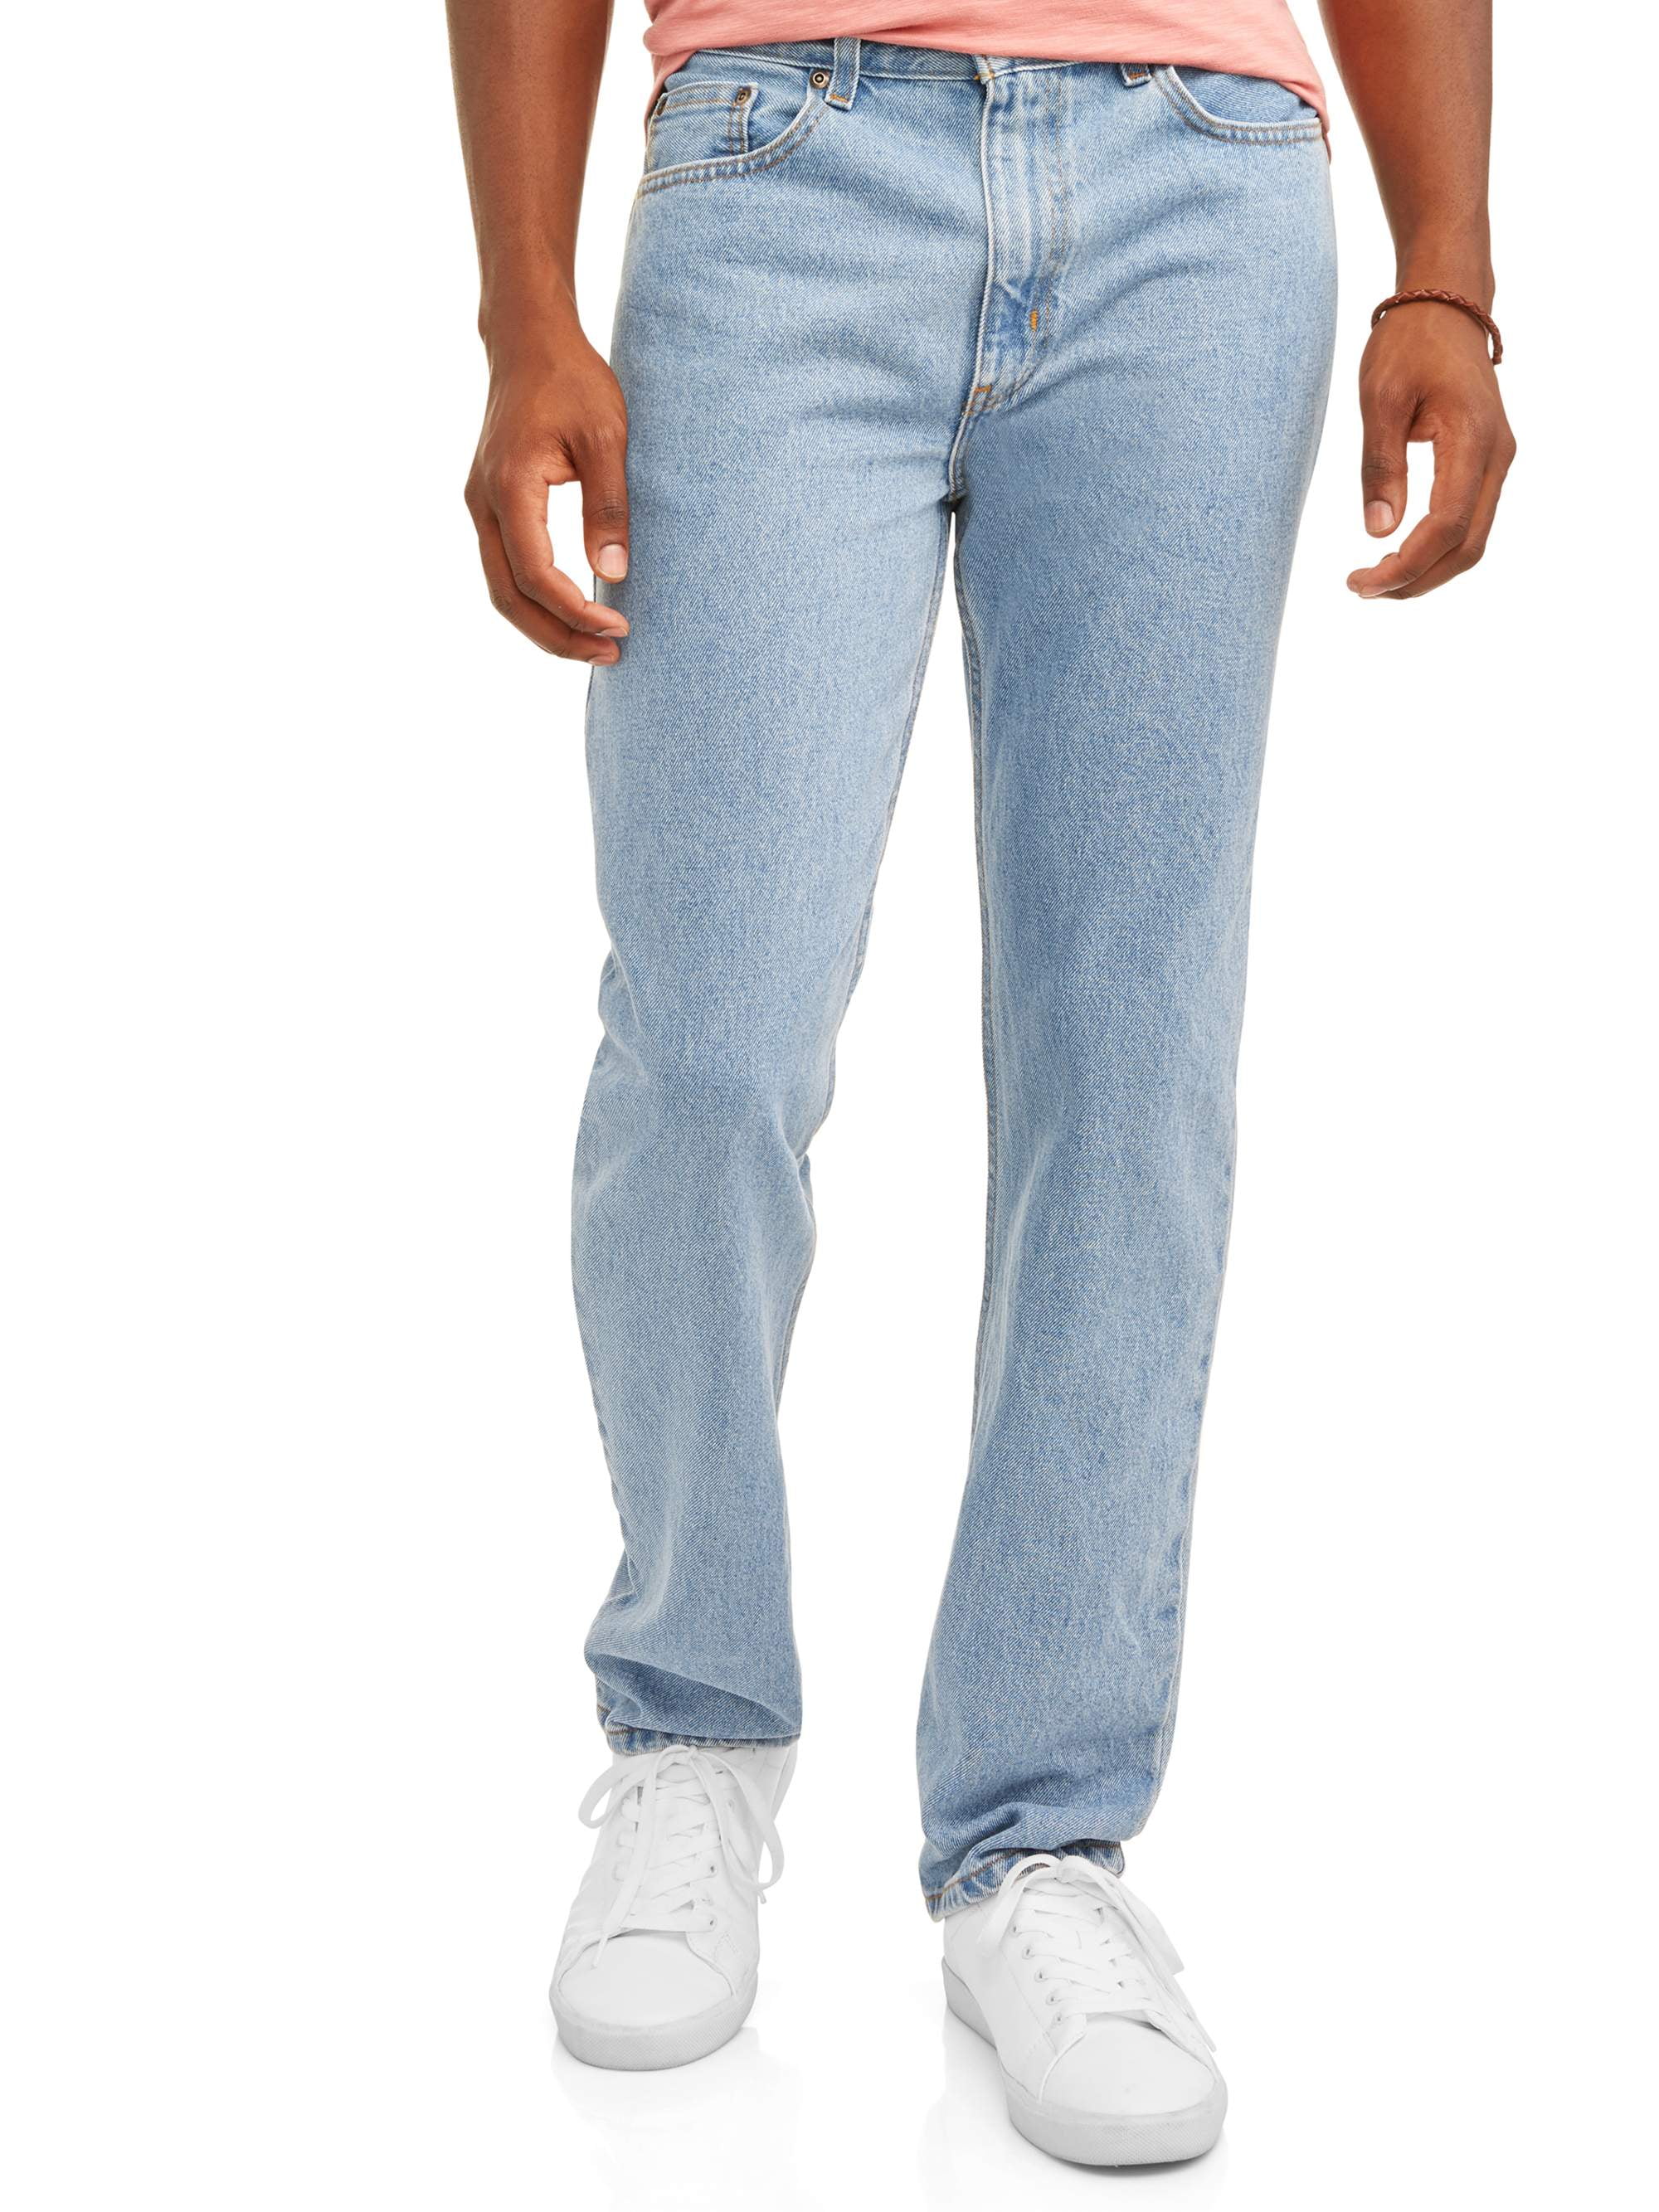 Blue Denim Jeans For Men